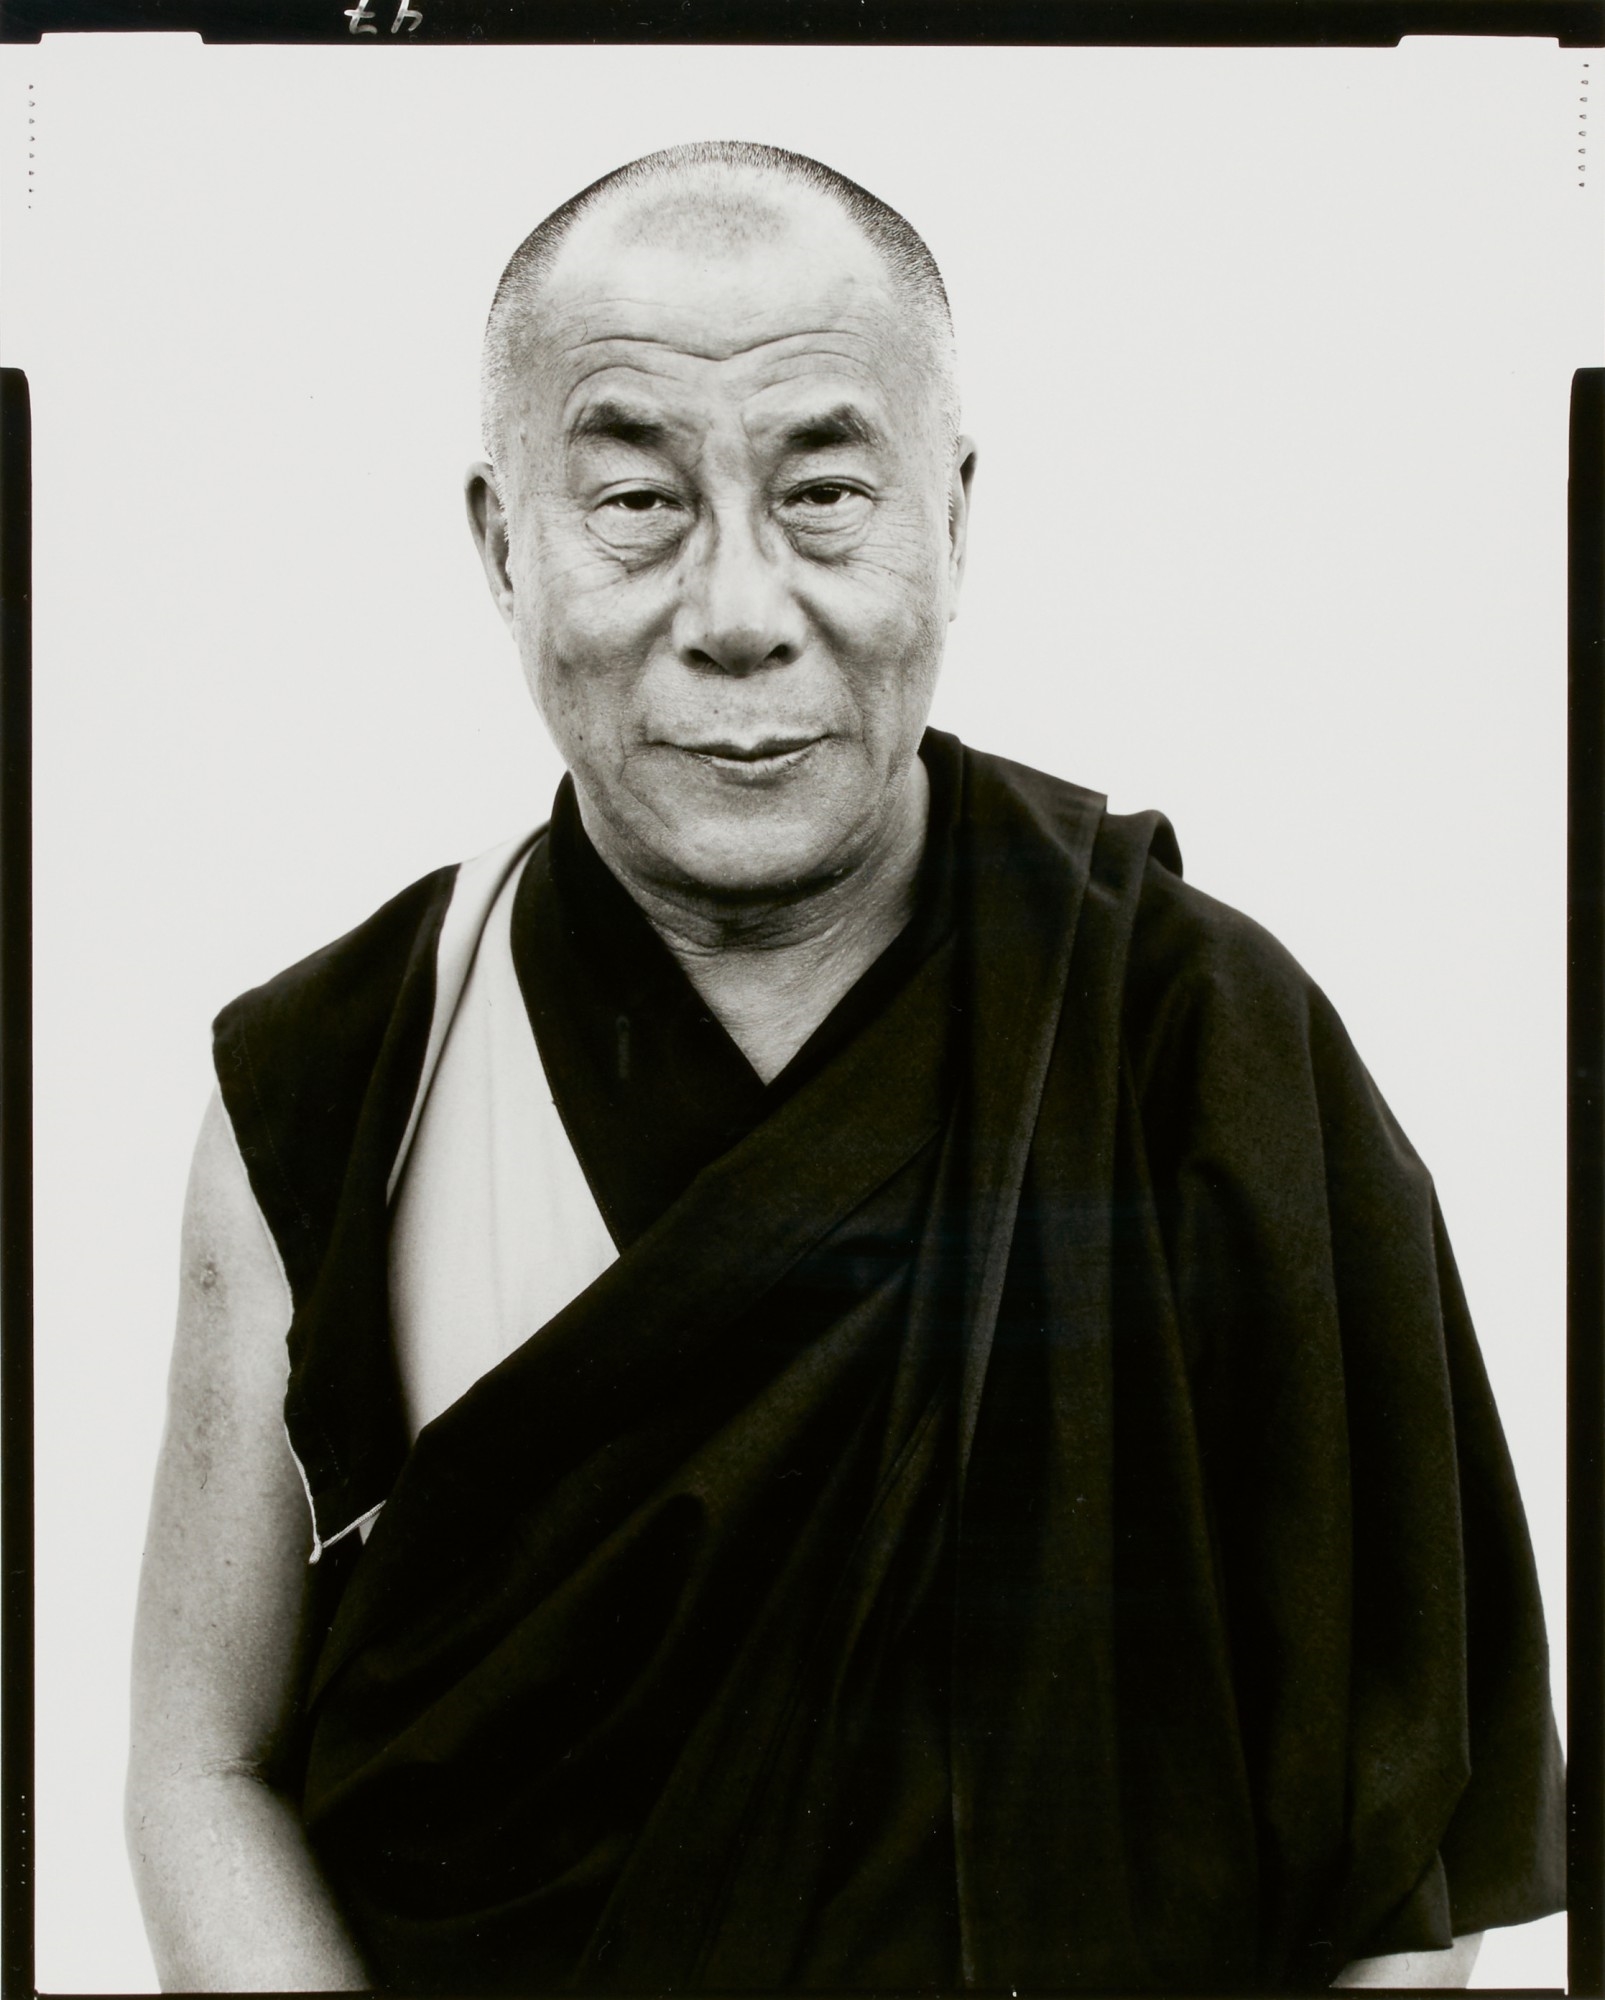 His Holiness, The Dalai Lama', Kamataka, India by Richard Avedon, January 1998